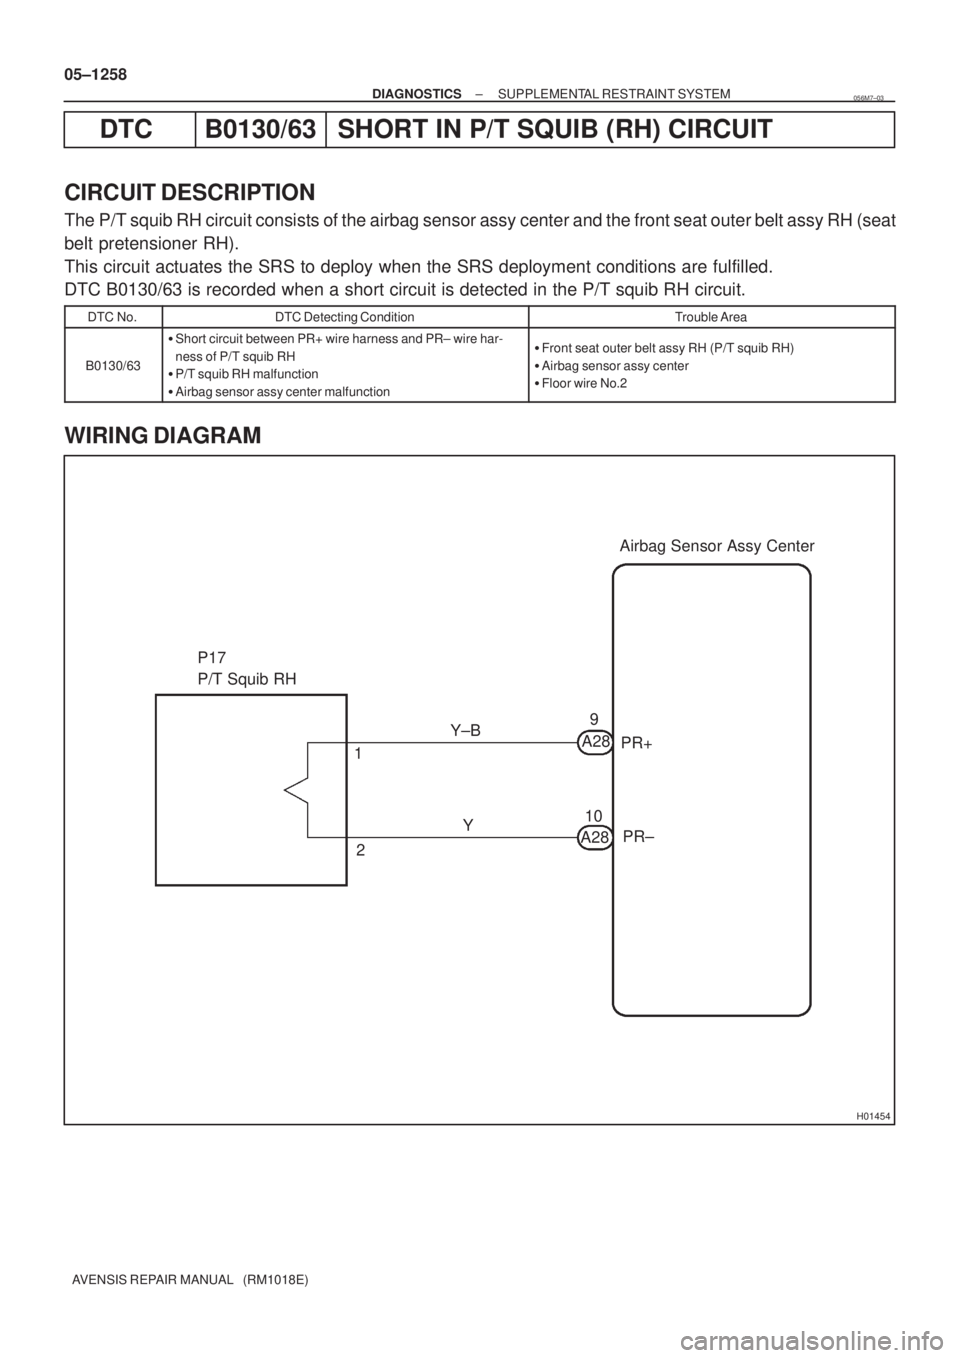 TOYOTA AVENSIS 2005  Service Repair Manual H01454
A28
PR+
PR± Y±B
Y 1
2Airbag Sensor Assy Center
P17
P/T Squib RH
A289
10 05±1258
± DIAGNOSTICSSUPPLEMENTAL RESTRAINT SYSTEM
AVENSIS REPAIR MANUAL   (RM1018E)
DTC B0130/63 SHORT IN P/T SQUIB 